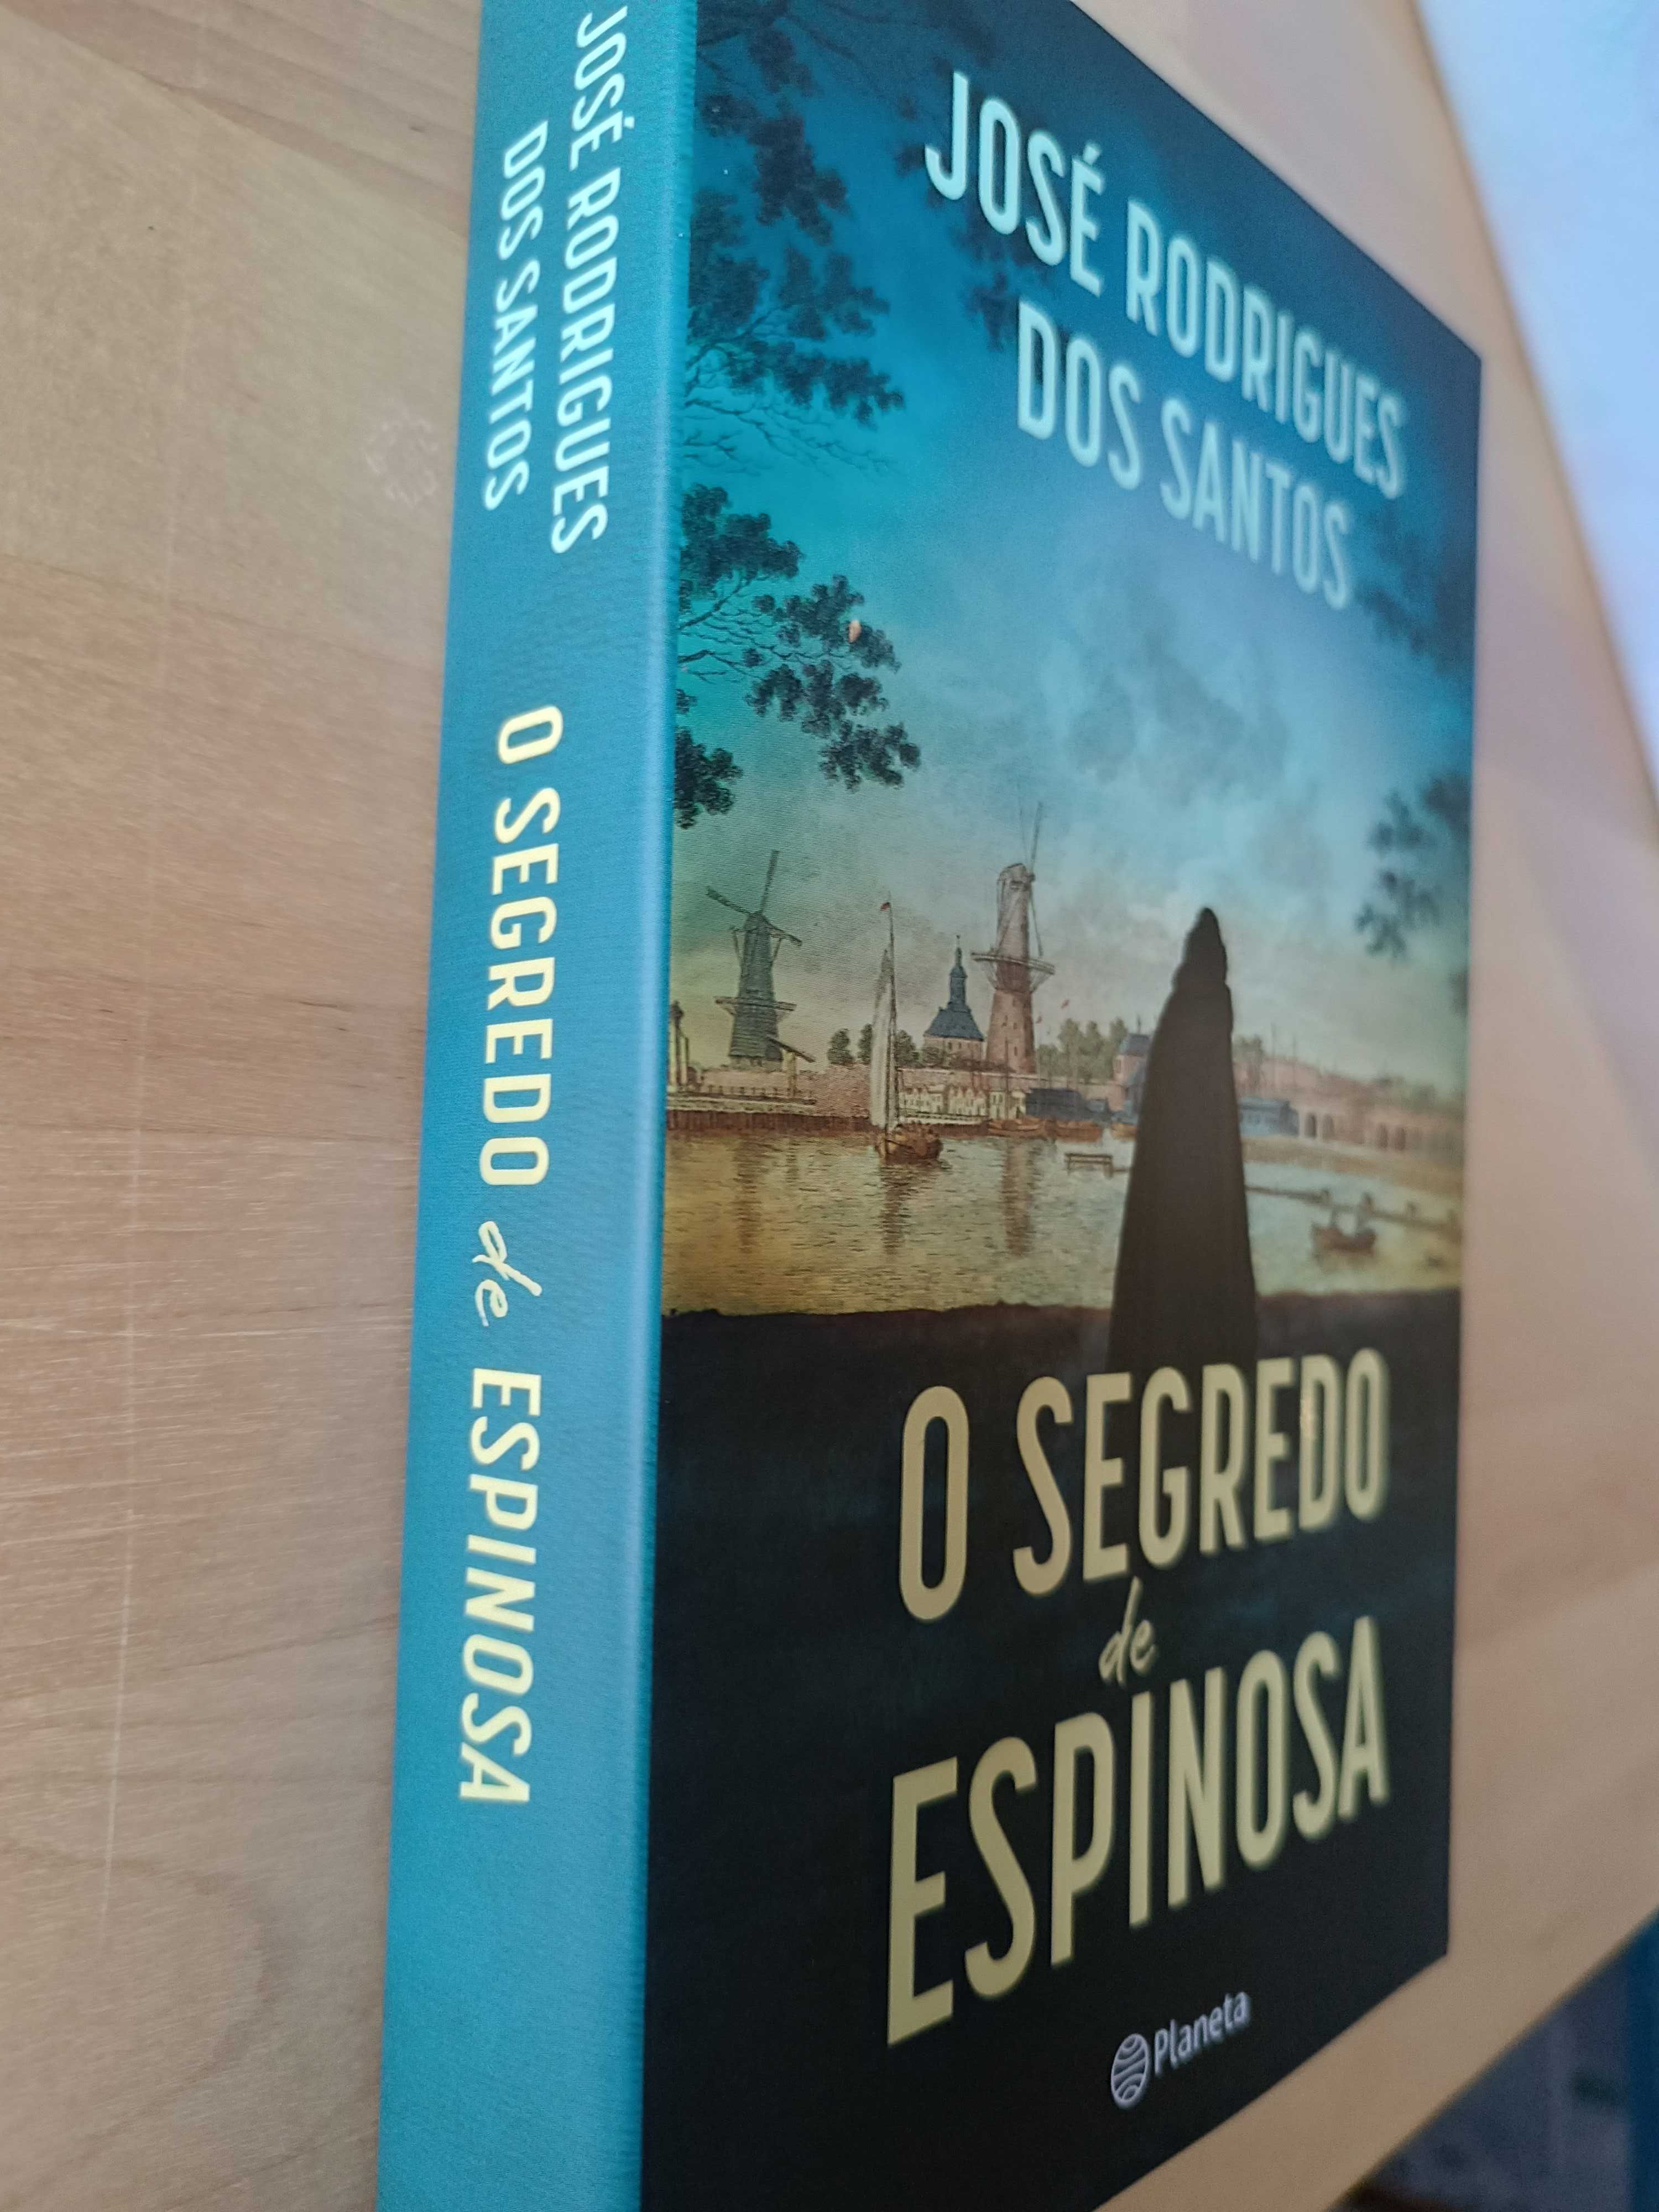 Livro novo de José Rodrigues dos o SEGREDO DE ESPINOSA